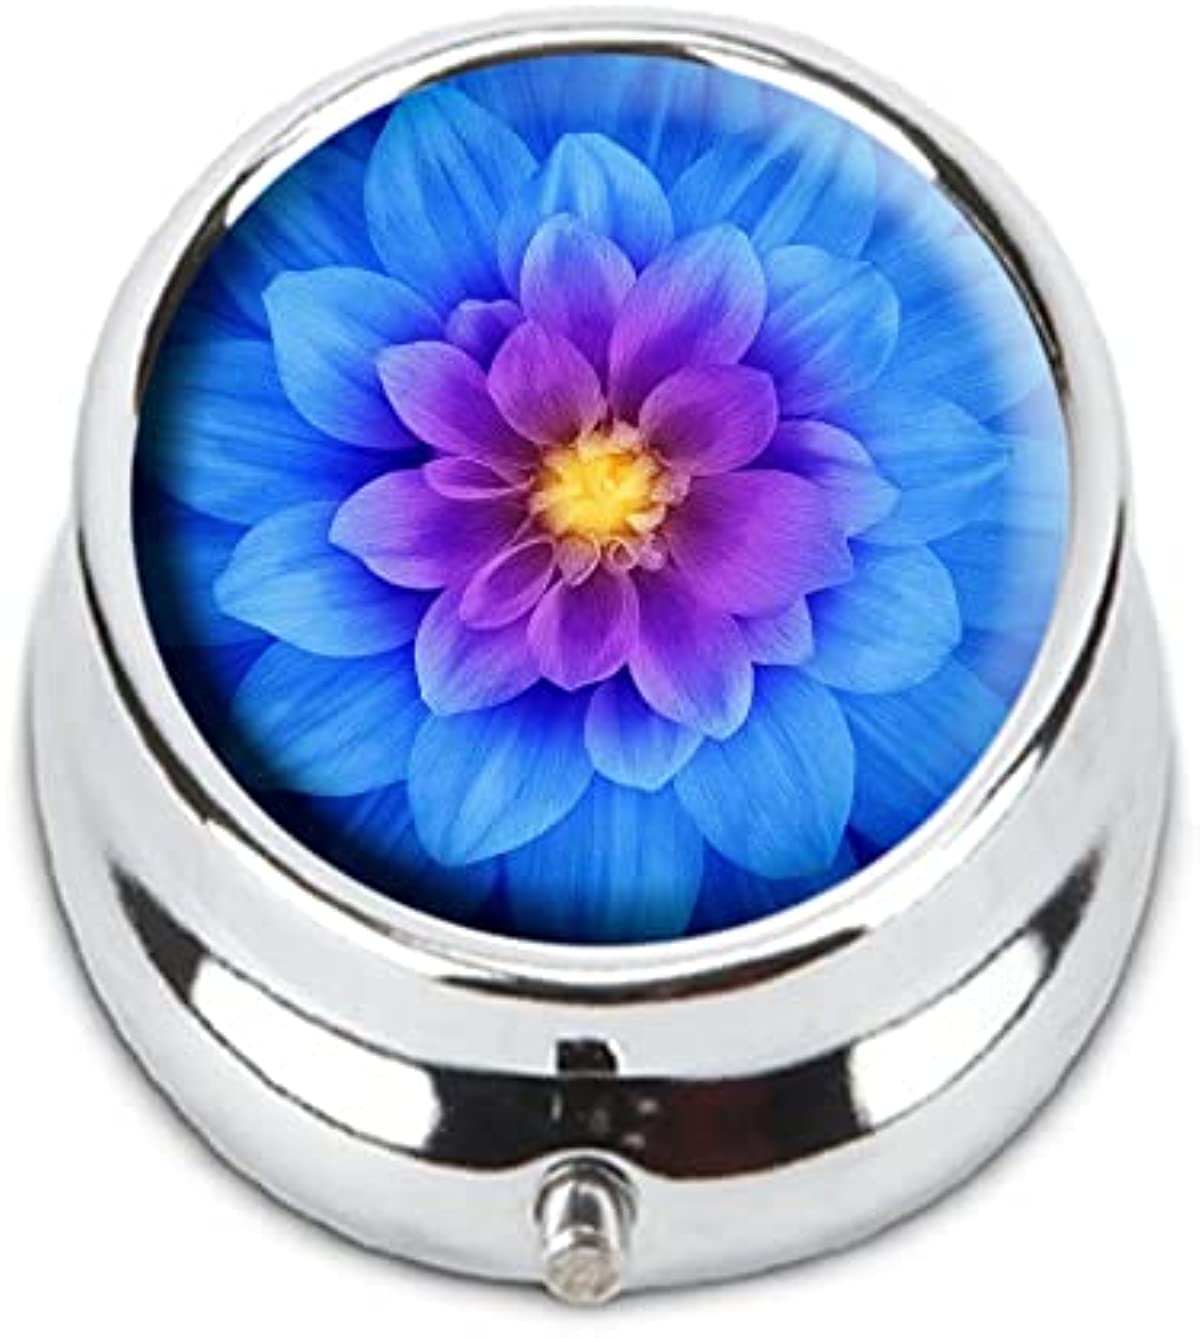 FQJNS Color Custom Fashion Round Pill Box Tablet Holder Pocket Purse Organizer Case Decoration Box(Blue Watercolor Lotus Flower)